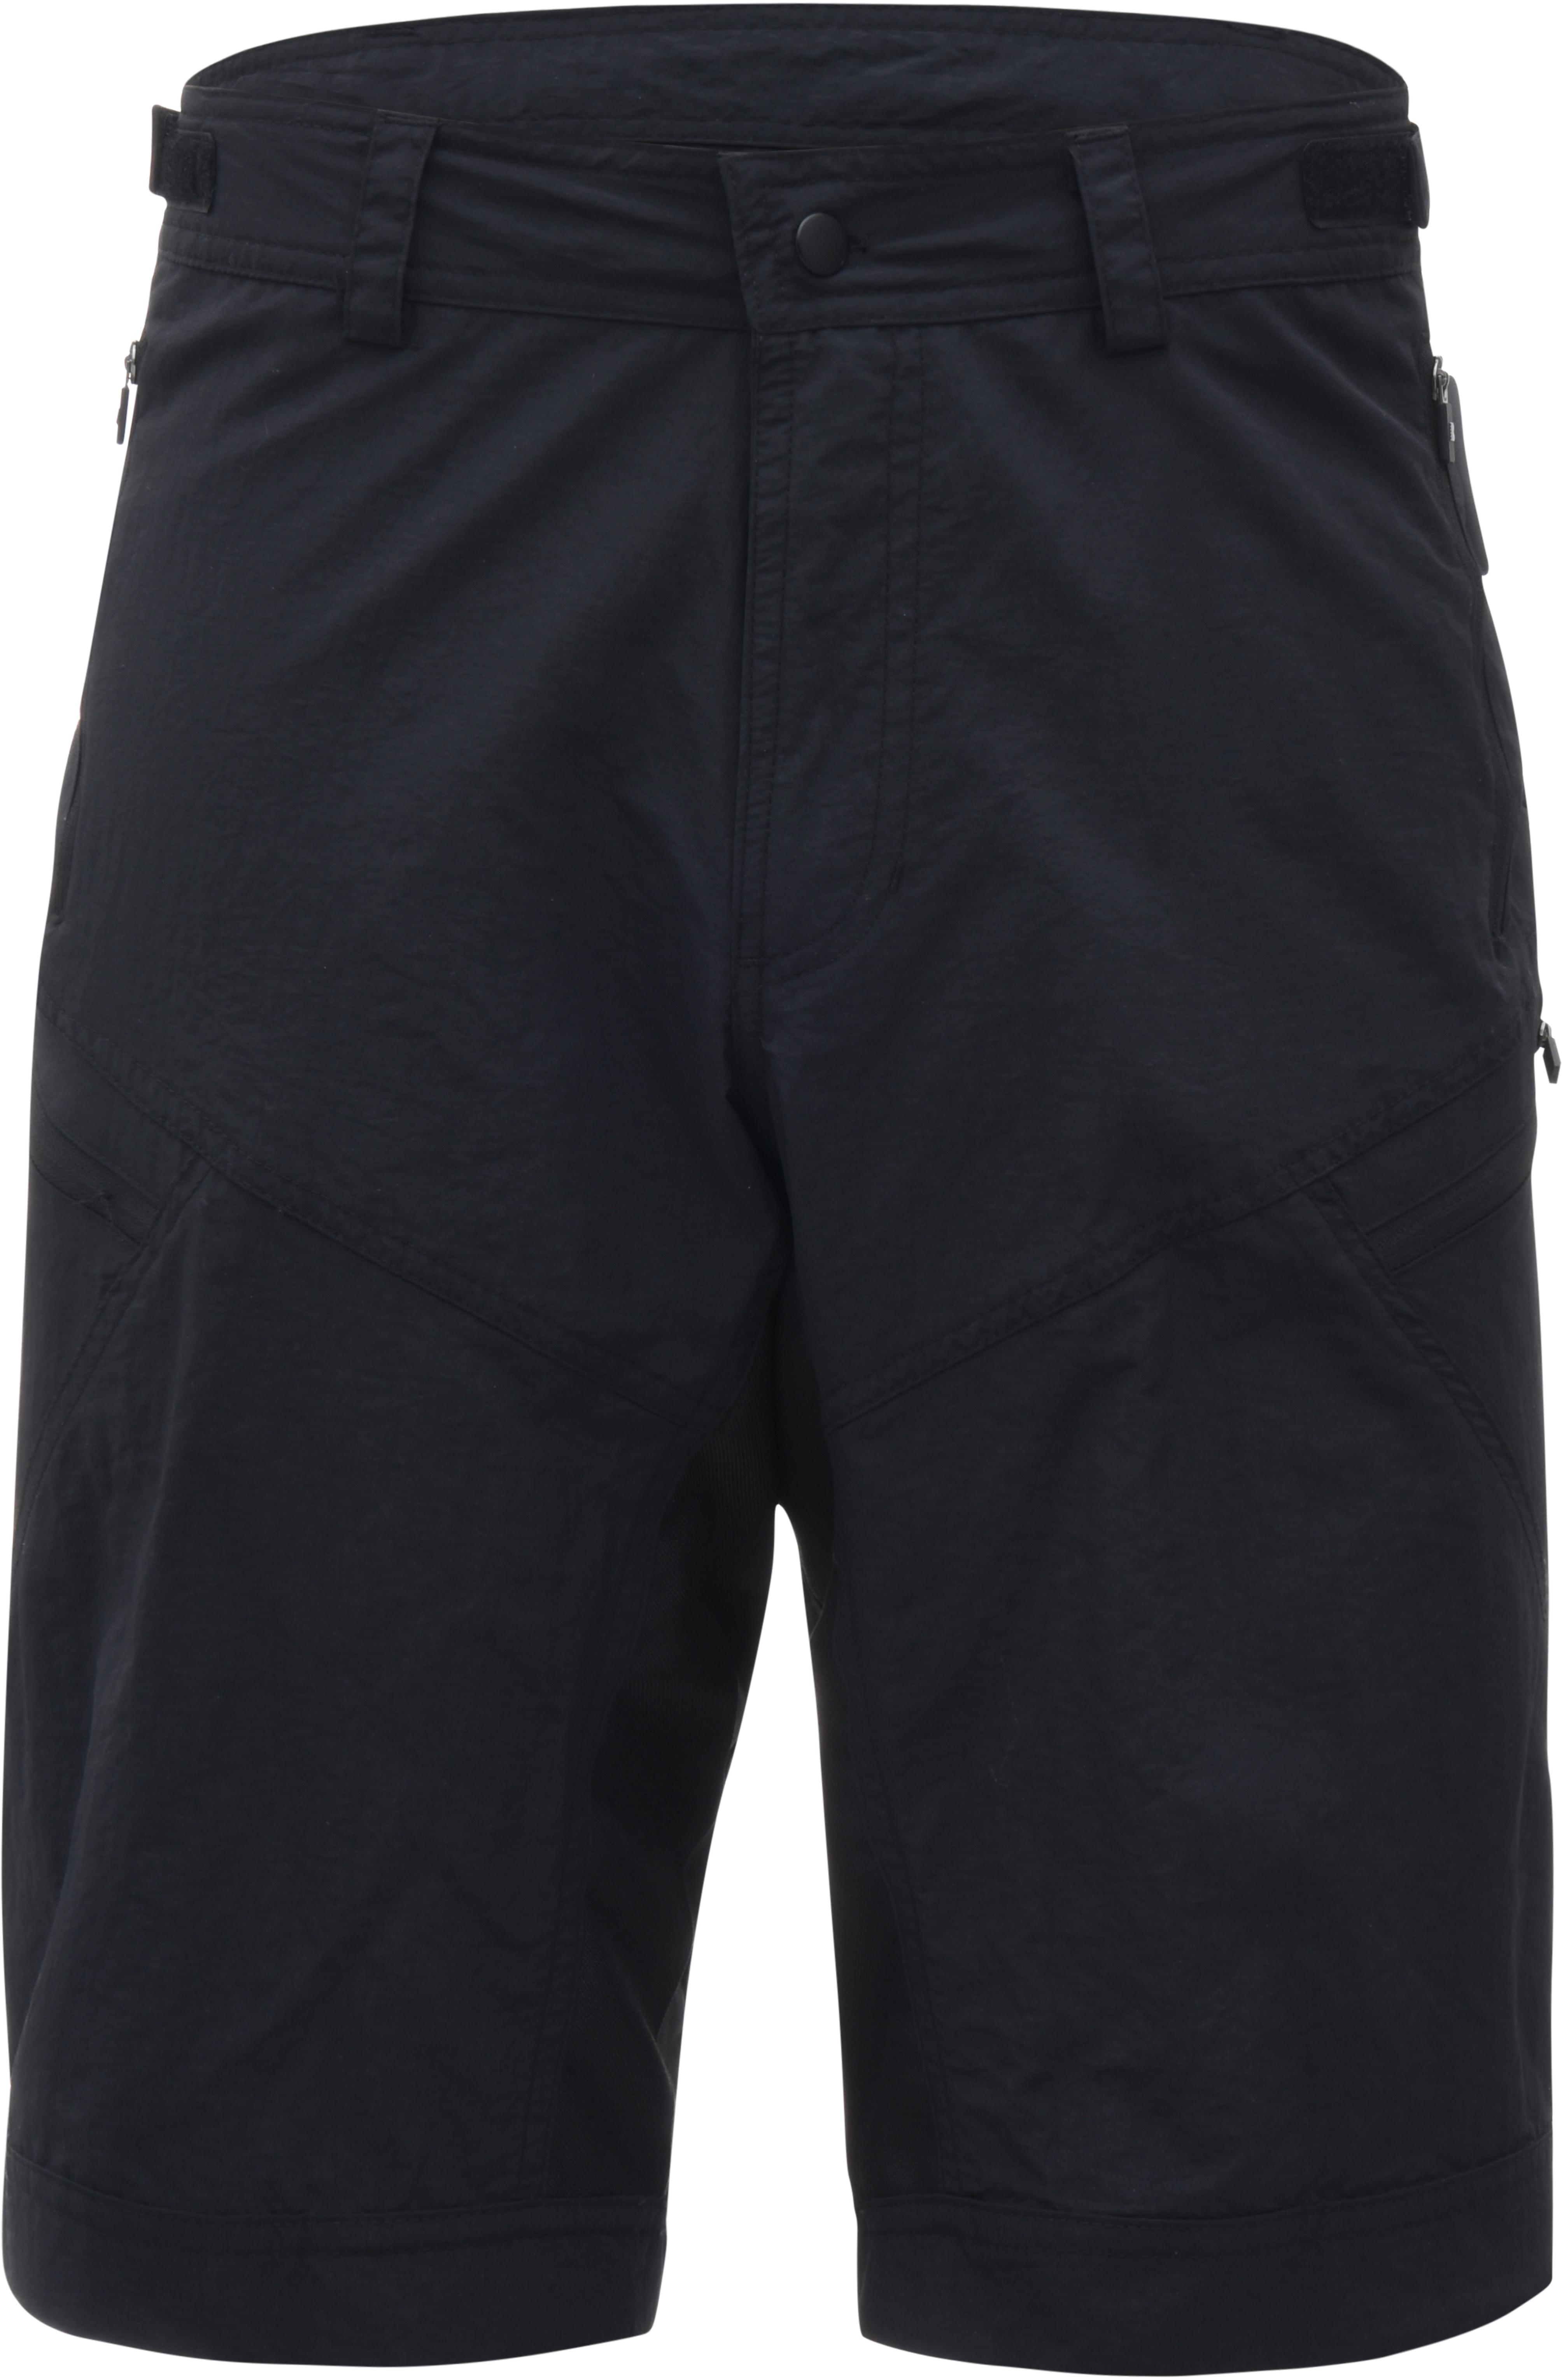 boardman casual cycle shorts